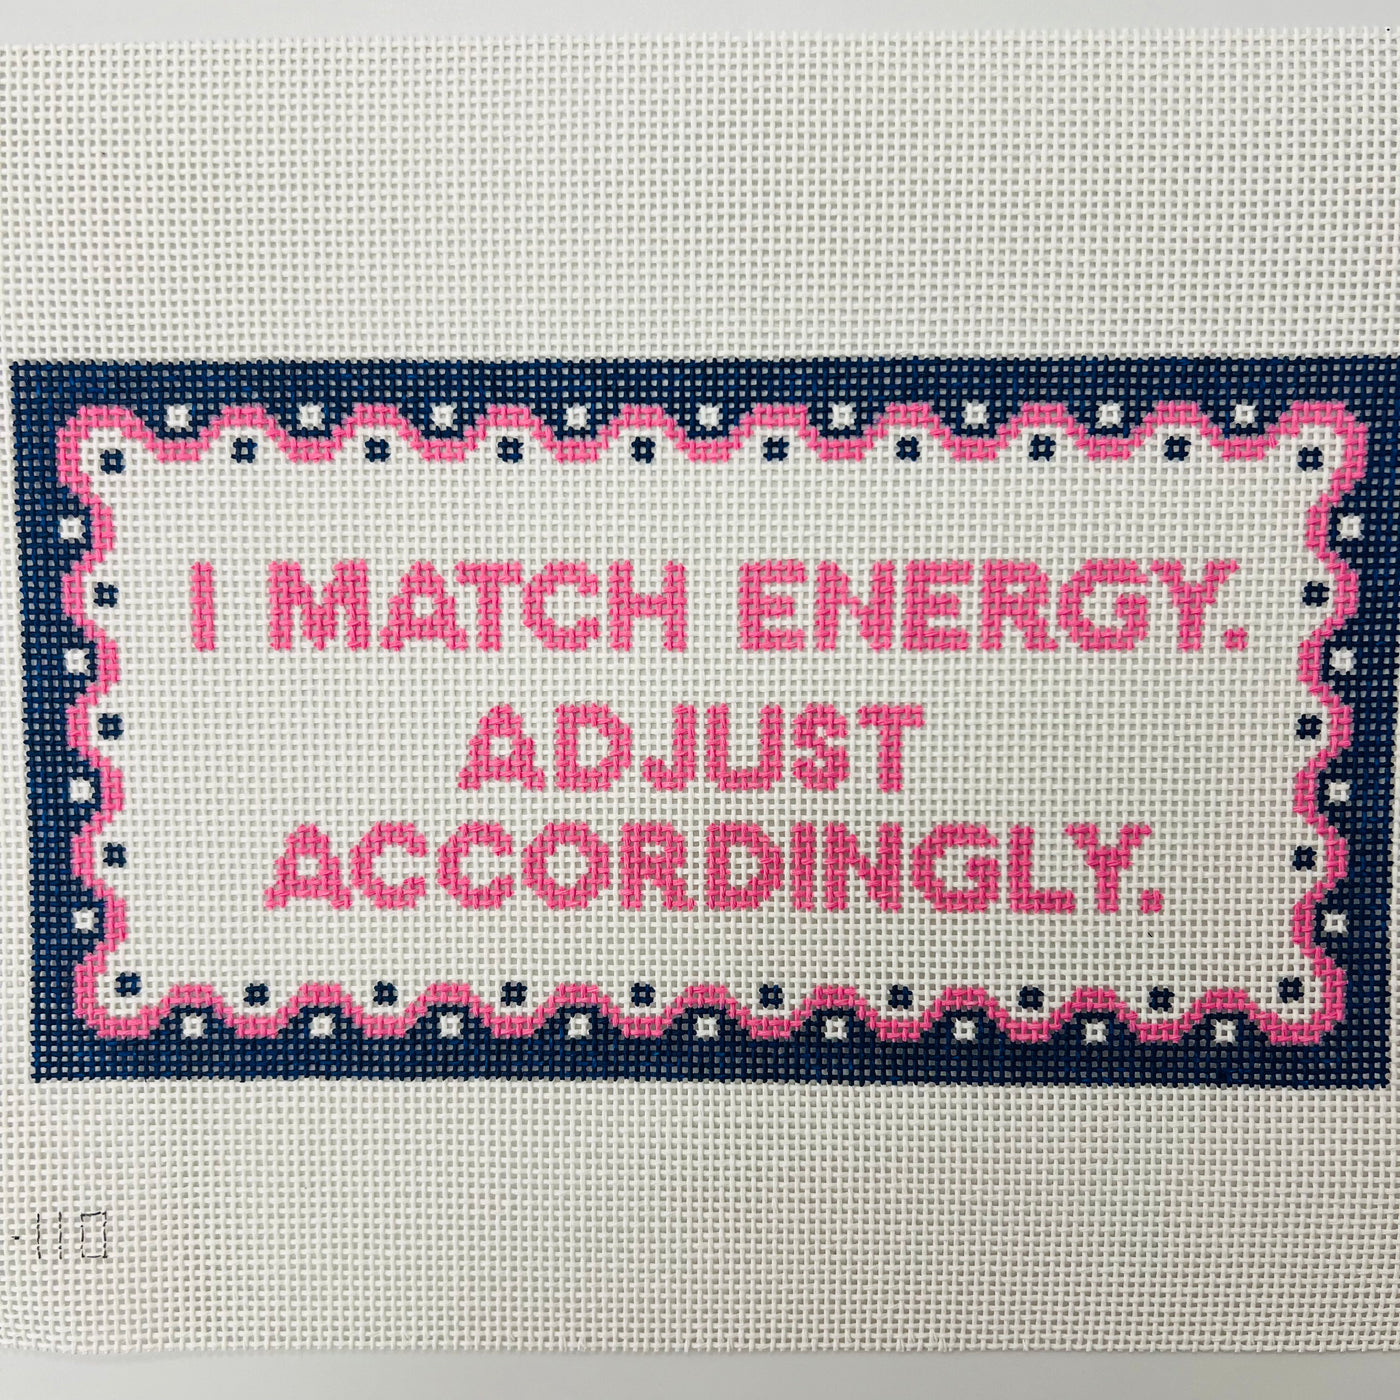 I Match Energy. Adjust Accordingly. Needlepoint Canvas